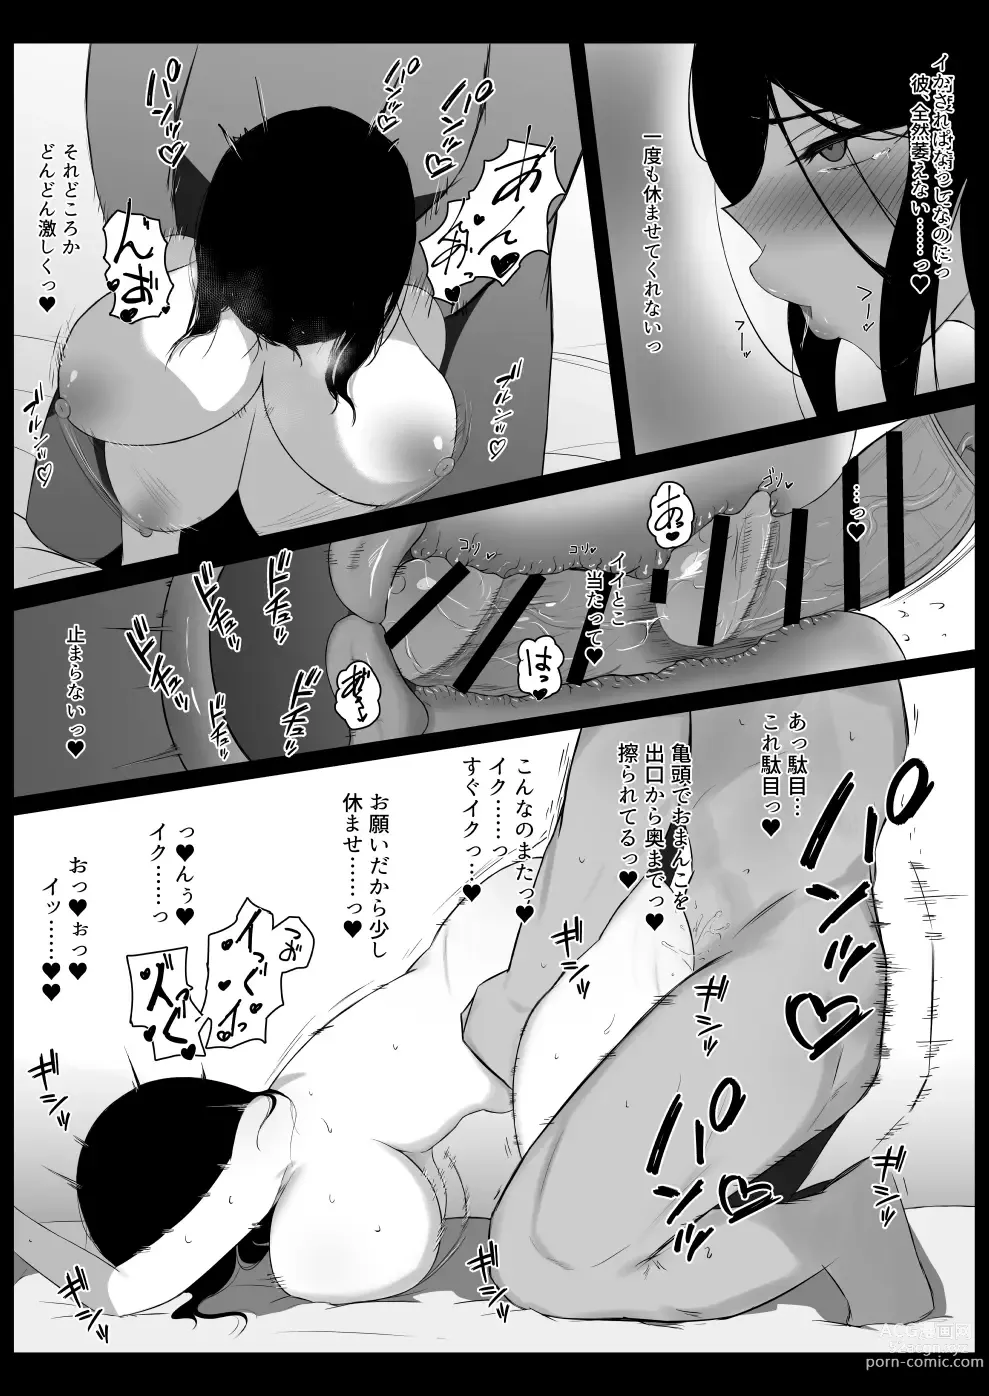 Page 16 of doujinshi Musume no kareshi